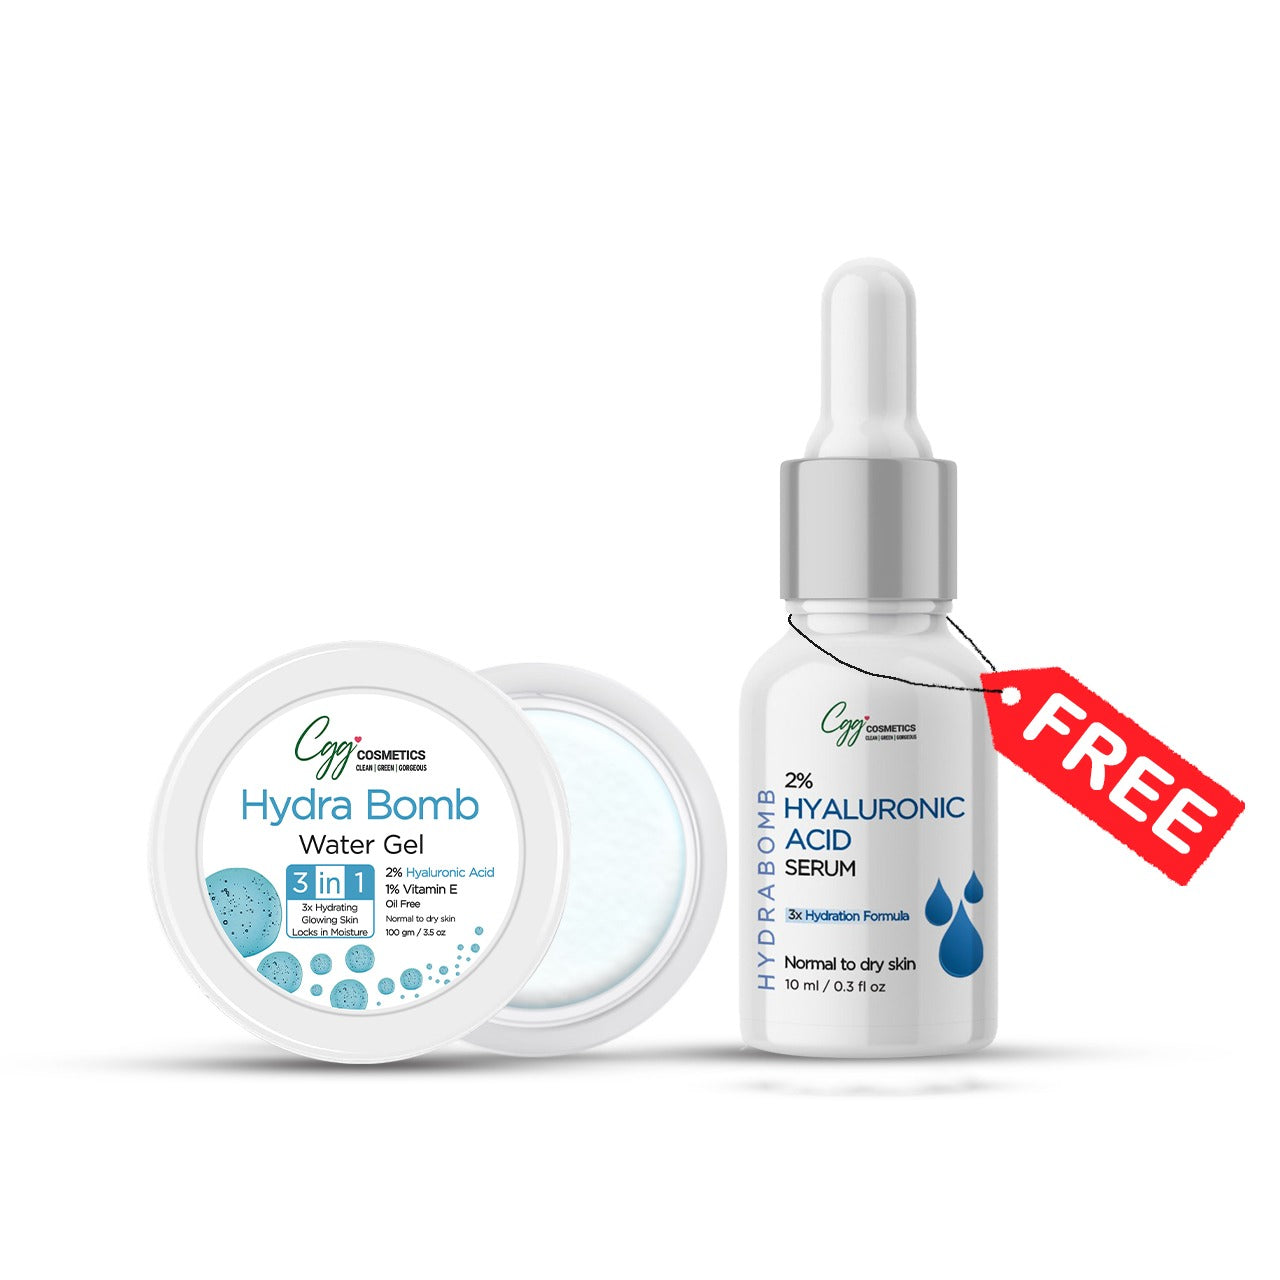 CGG Cosmetics Hydra Bomb Water Gel 100gm + FREE 10ml Sample of 2% Hyaluronic Acid Serum